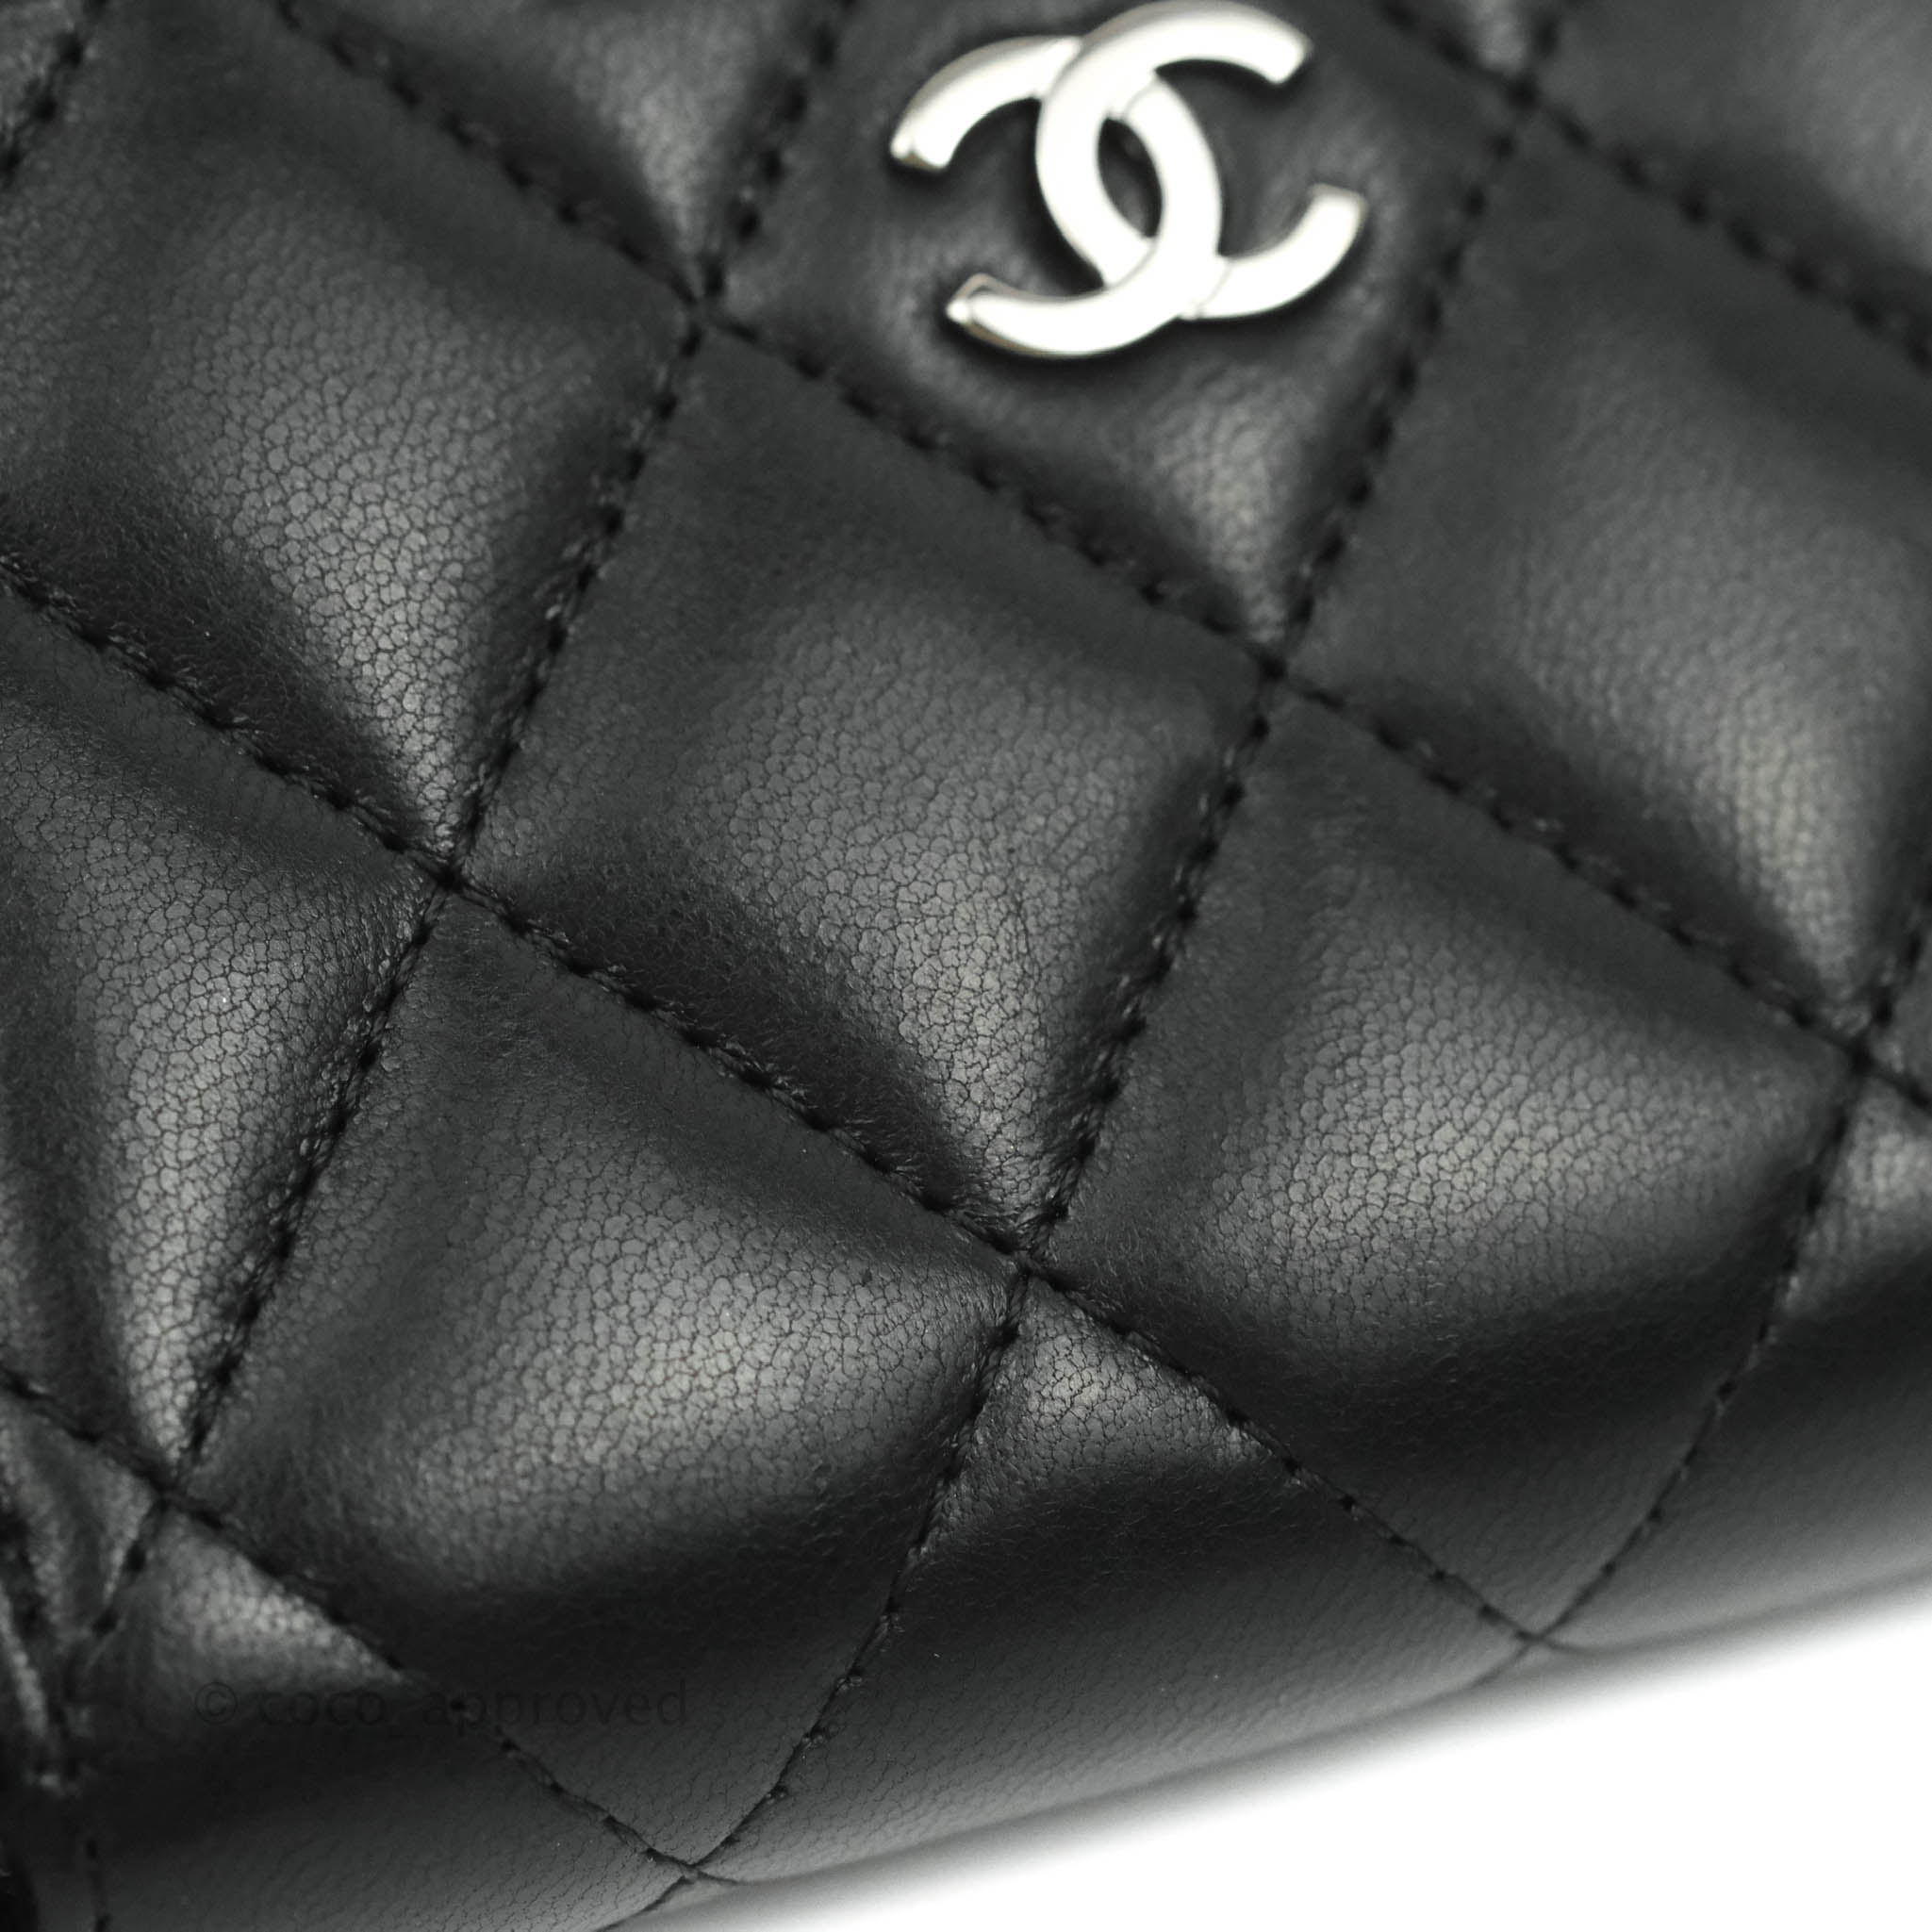 Chanel 19 Sliver Hardware Zipped Coin Purse Dark Grey - NOBLEMARS